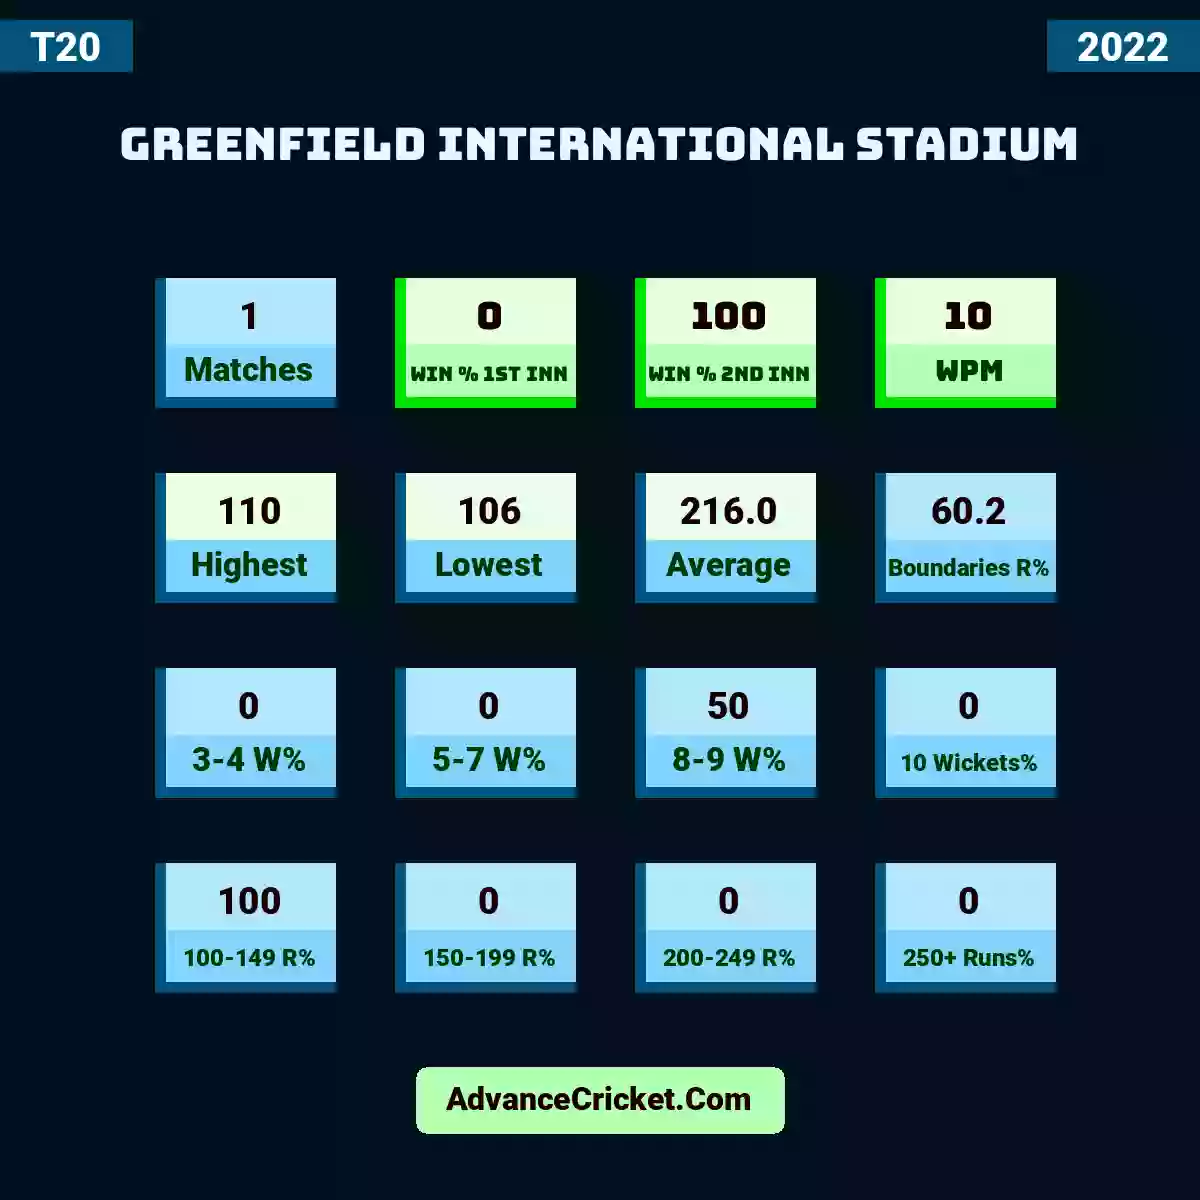 Image showing Greenfield International Stadium with Matches: 1, Win % 1st Inn: 0, Win % 2nd Inn: 100, WPM: 10, Highest: 110, Lowest: 106, Average: 216.0, Boundaries R%: 60.2, 3-4 W%: 0, 5-7 W%: 0, 8-9 W%: 50, 10 Wickets%: 0, 100-149 R%: 100, 150-199 R%: 0, 200-249 R%: 0, 250+ Runs%: 0.